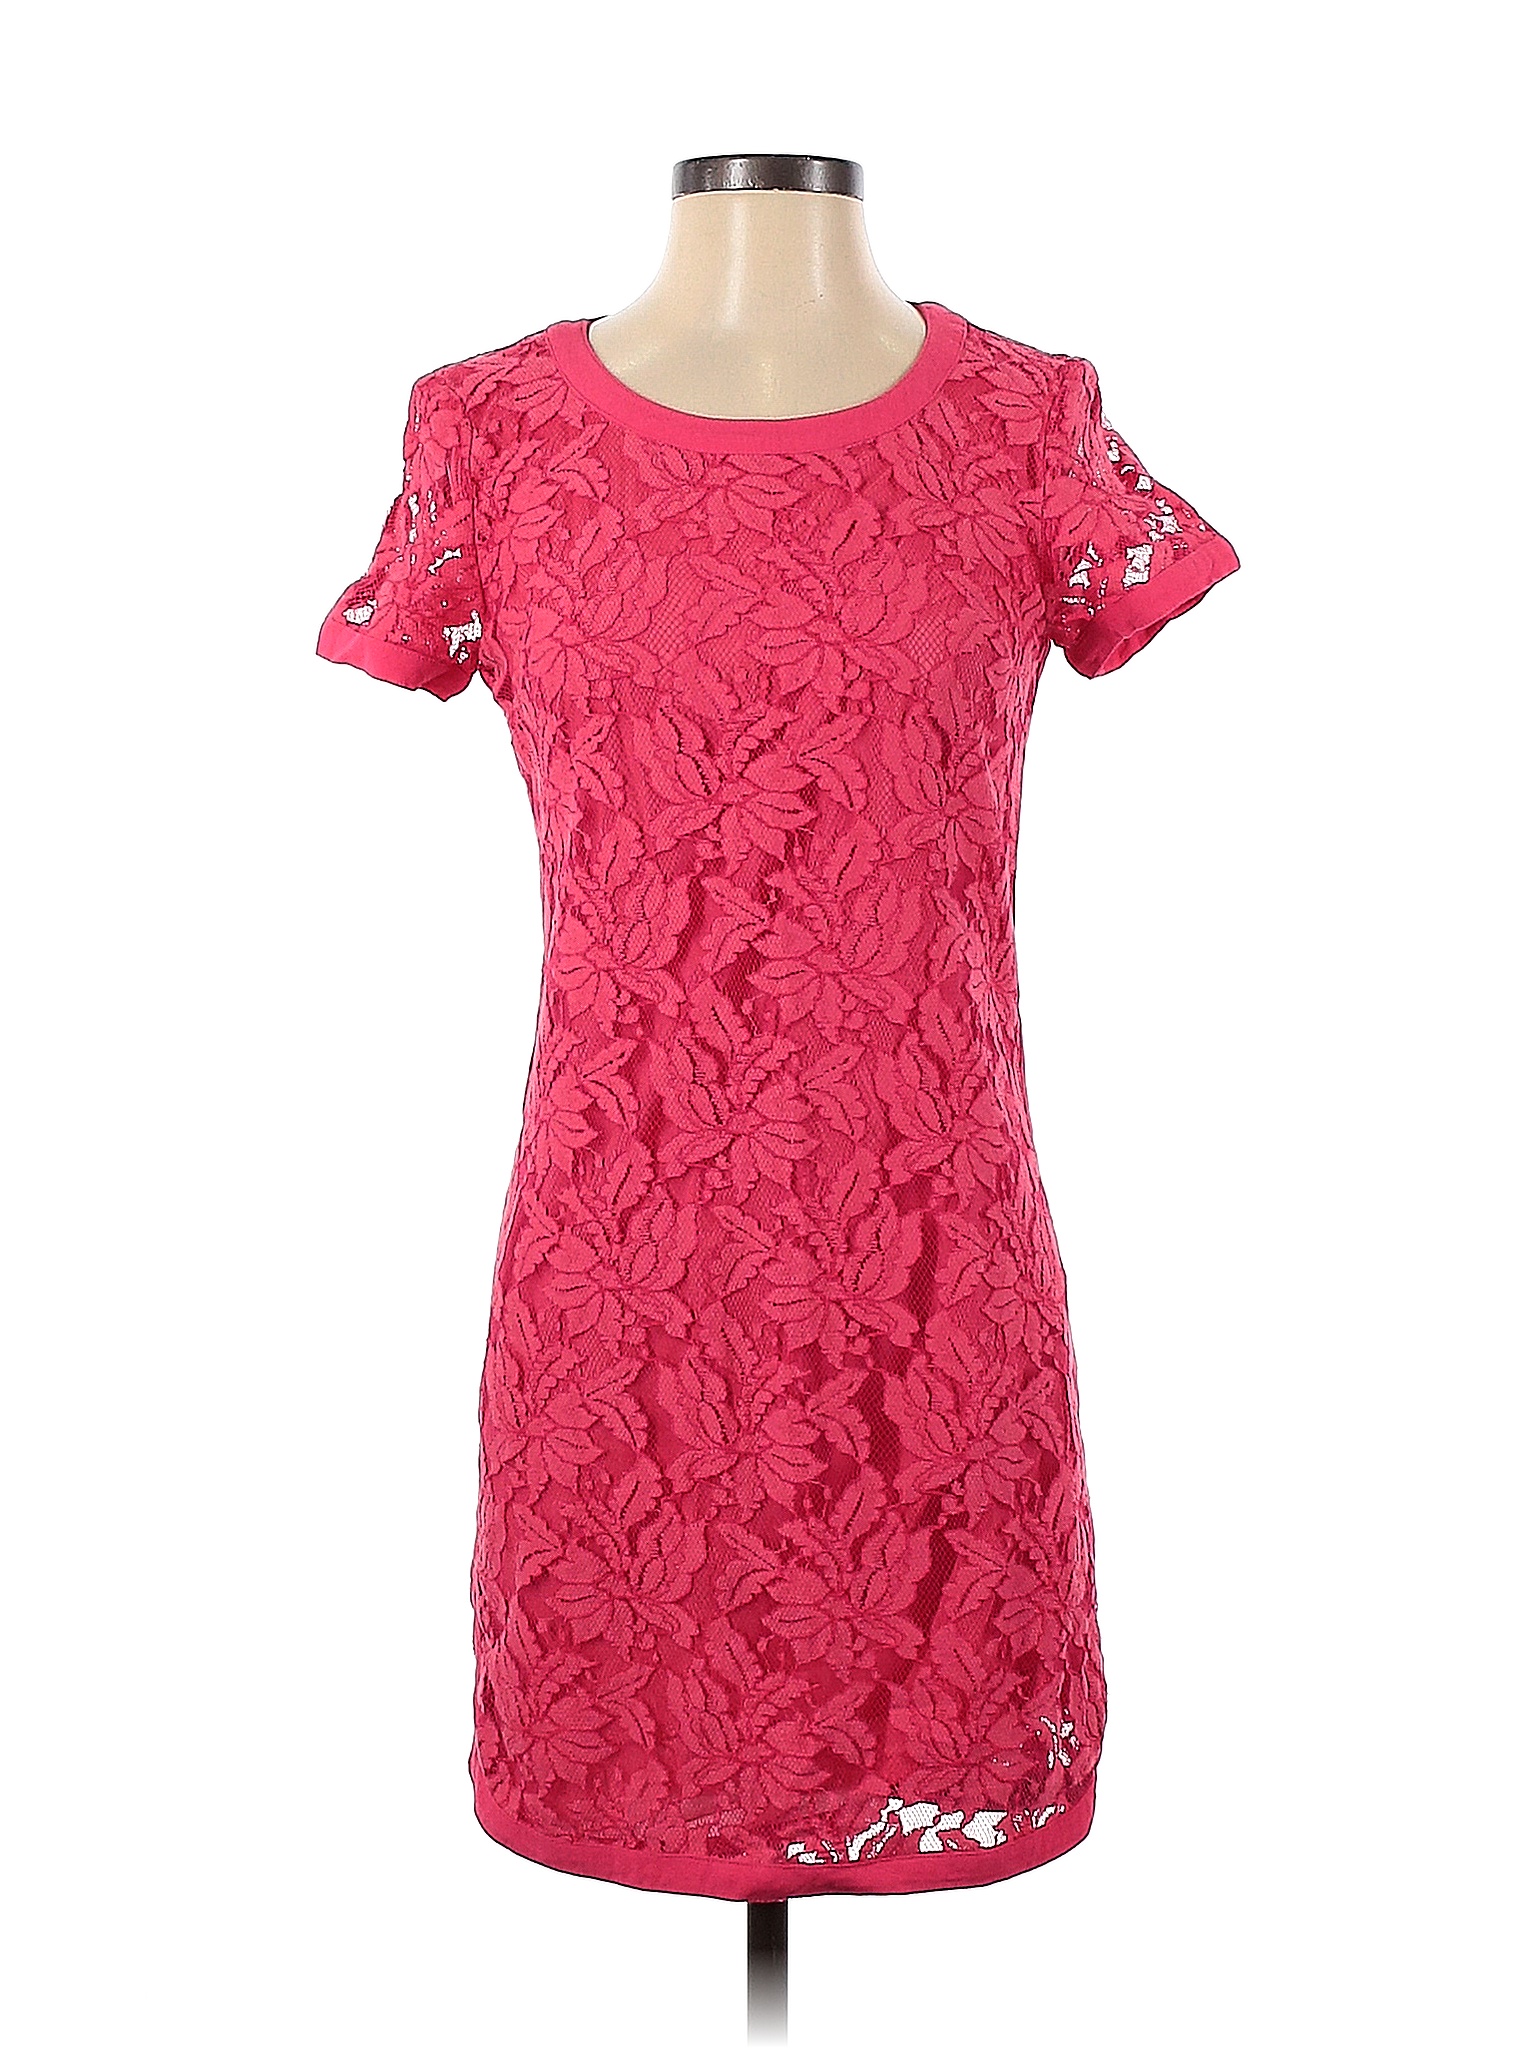 Donna Morgan Pink Cocktail Dress Size 4 - 89% off | thredUP